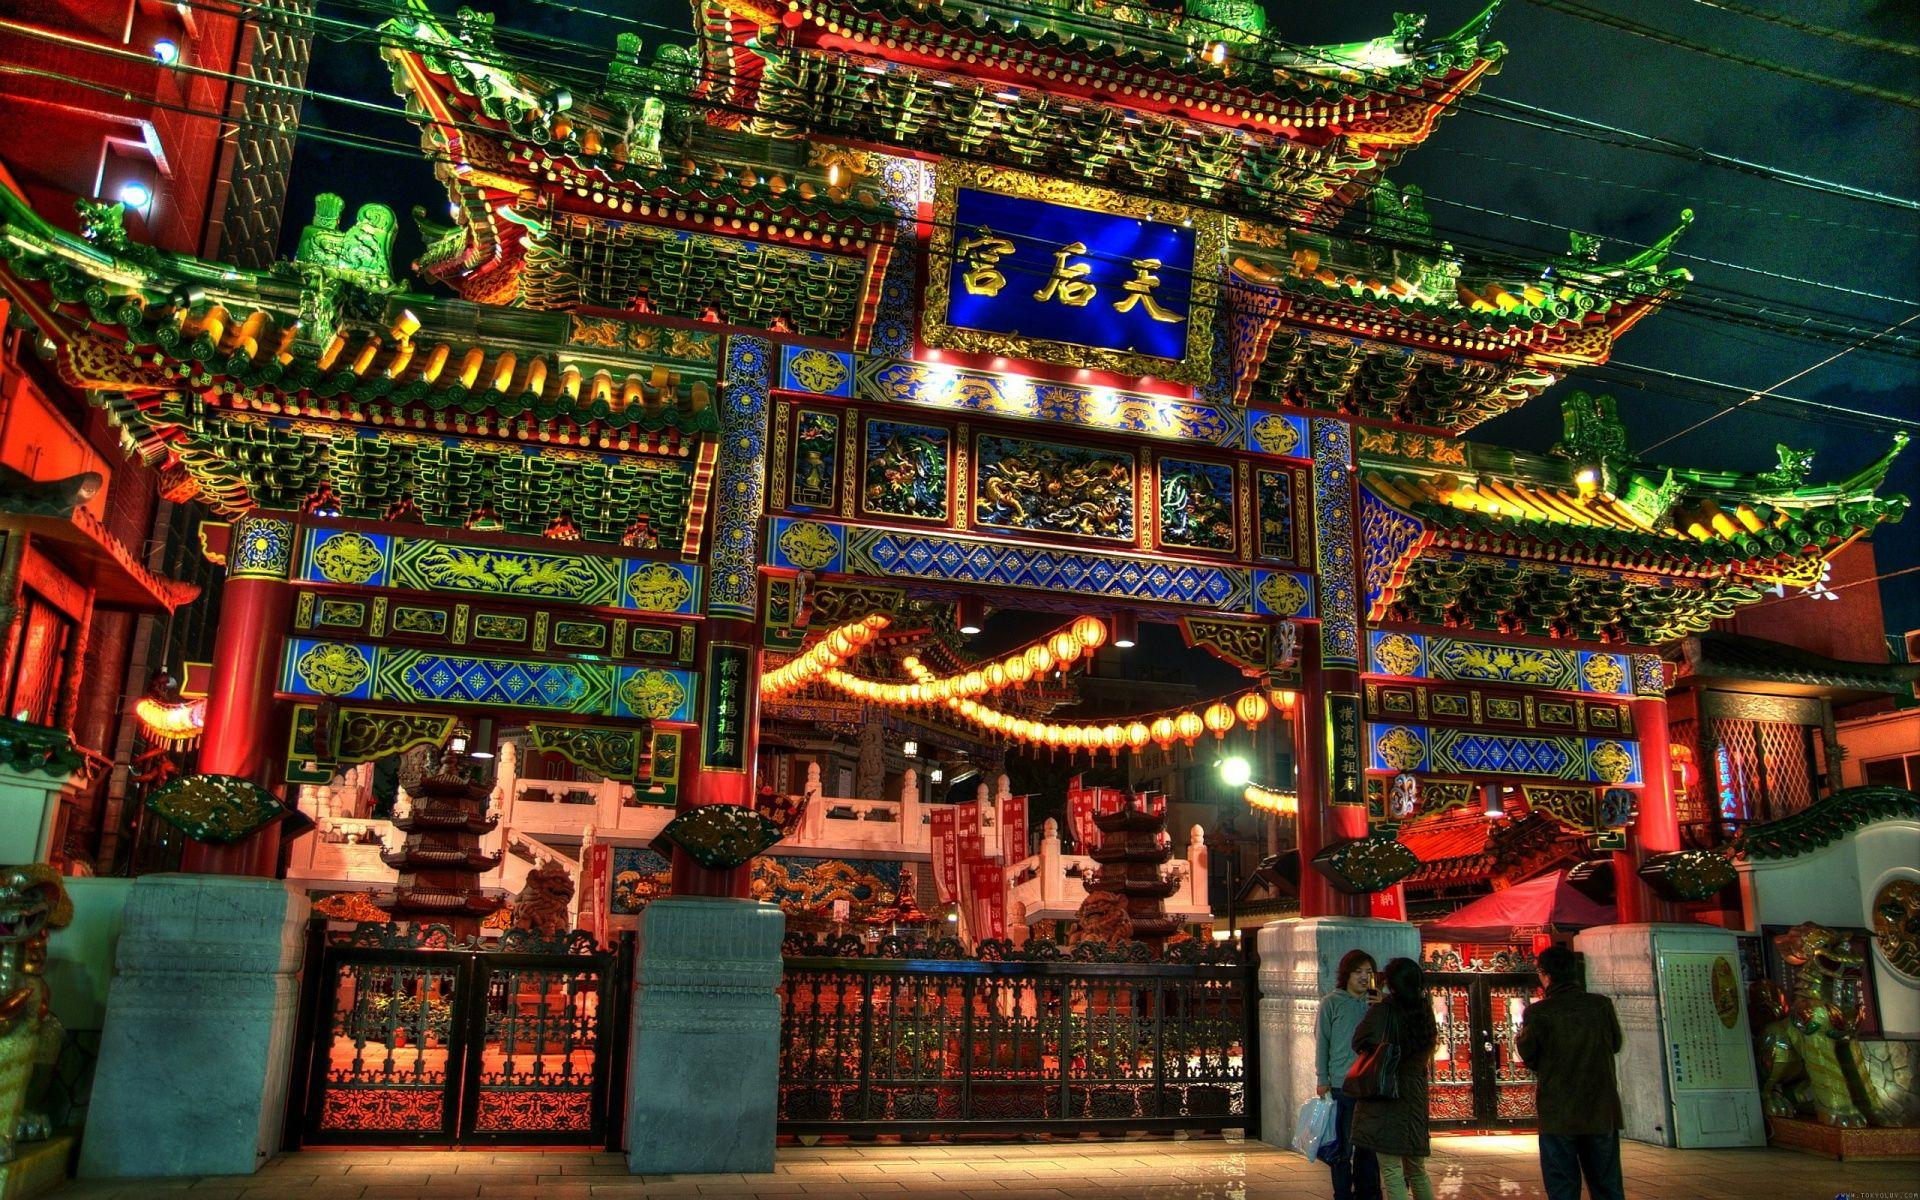 Splendid Chinese Pagoda Wallpaper. Pagodas, temples and shrines